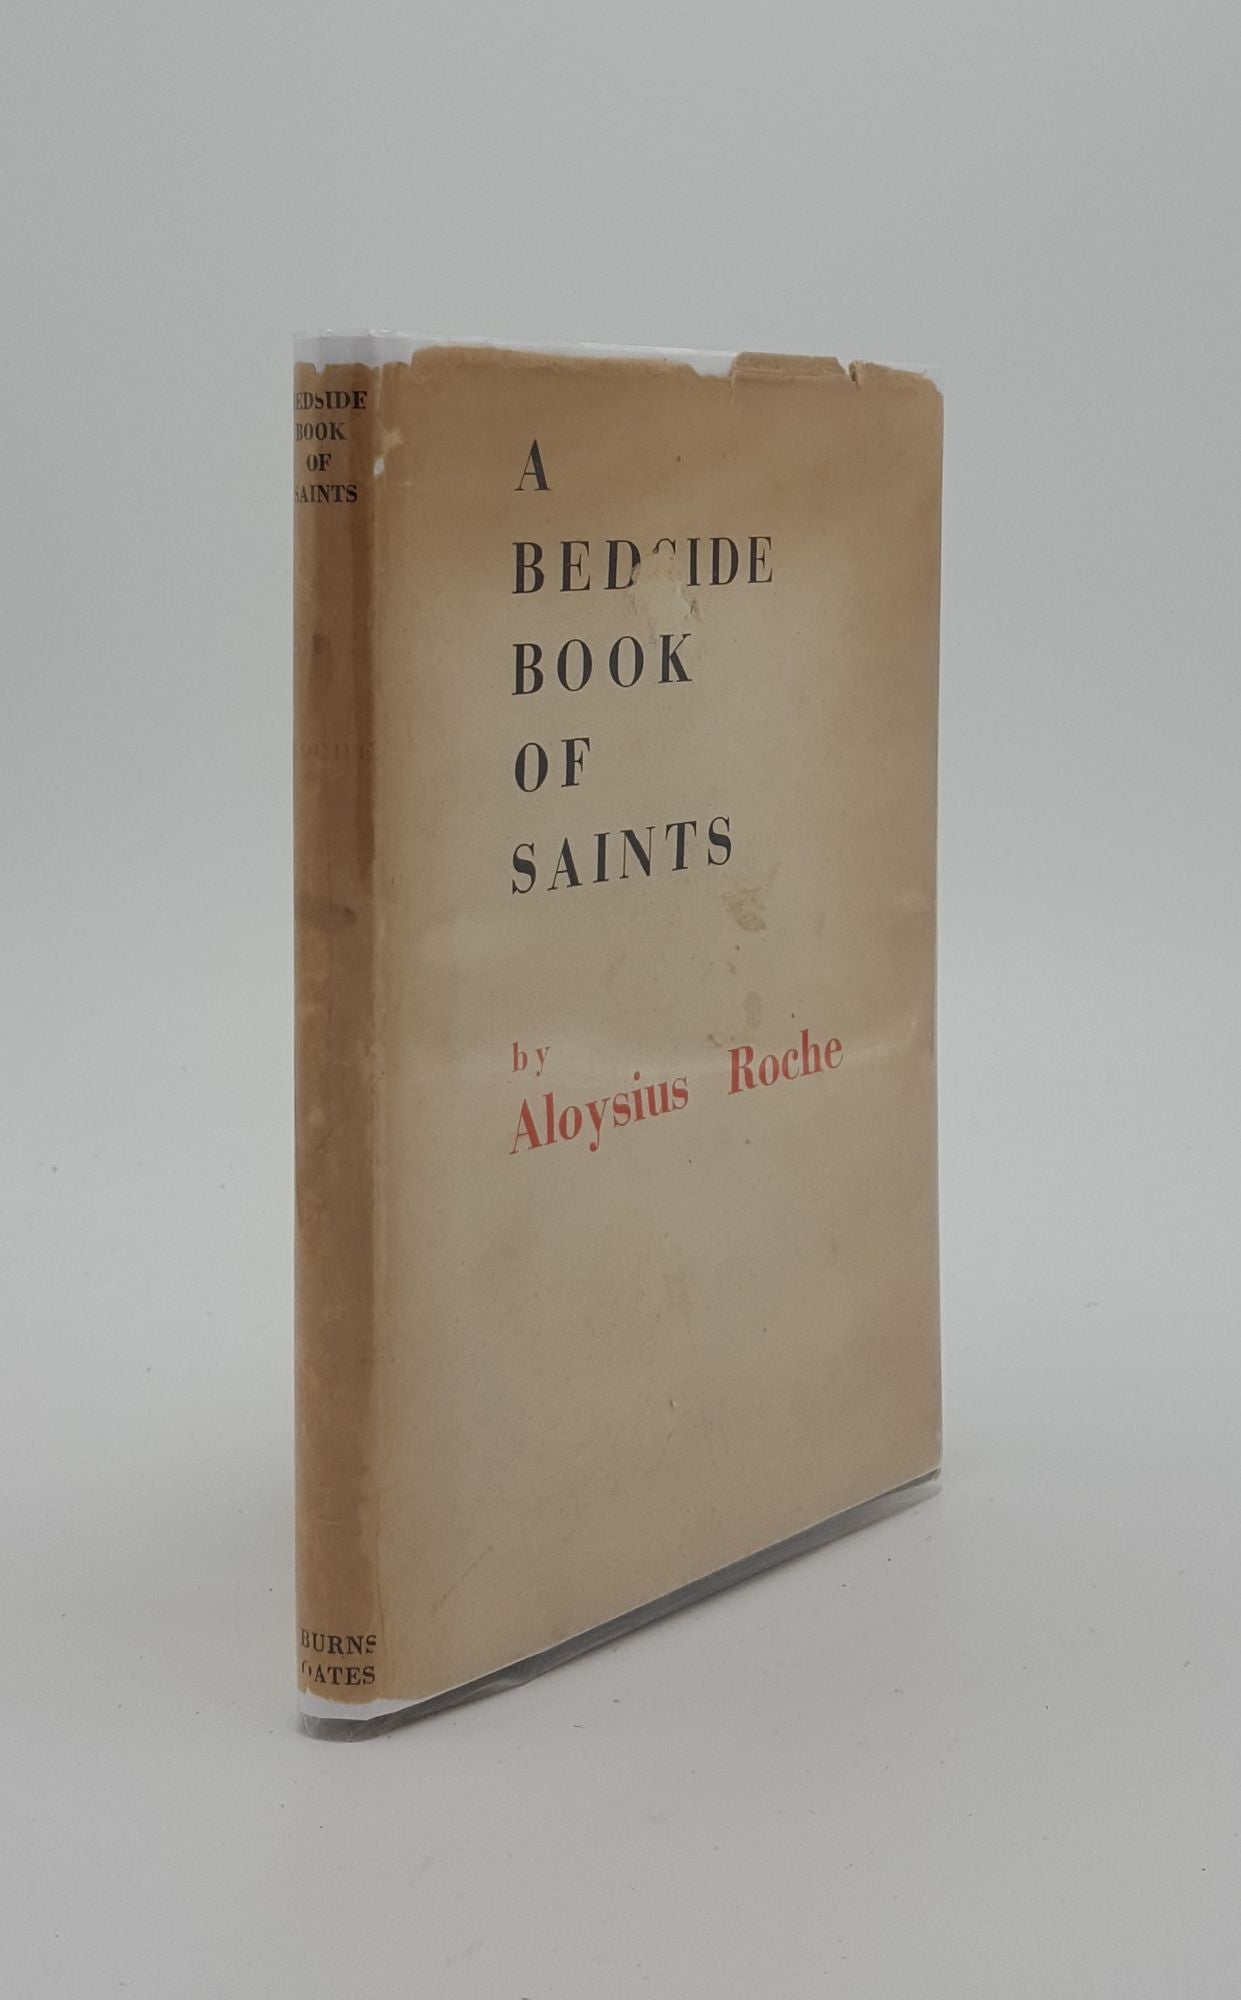 ROCHE Aloysius - A Bedside Book of Saints